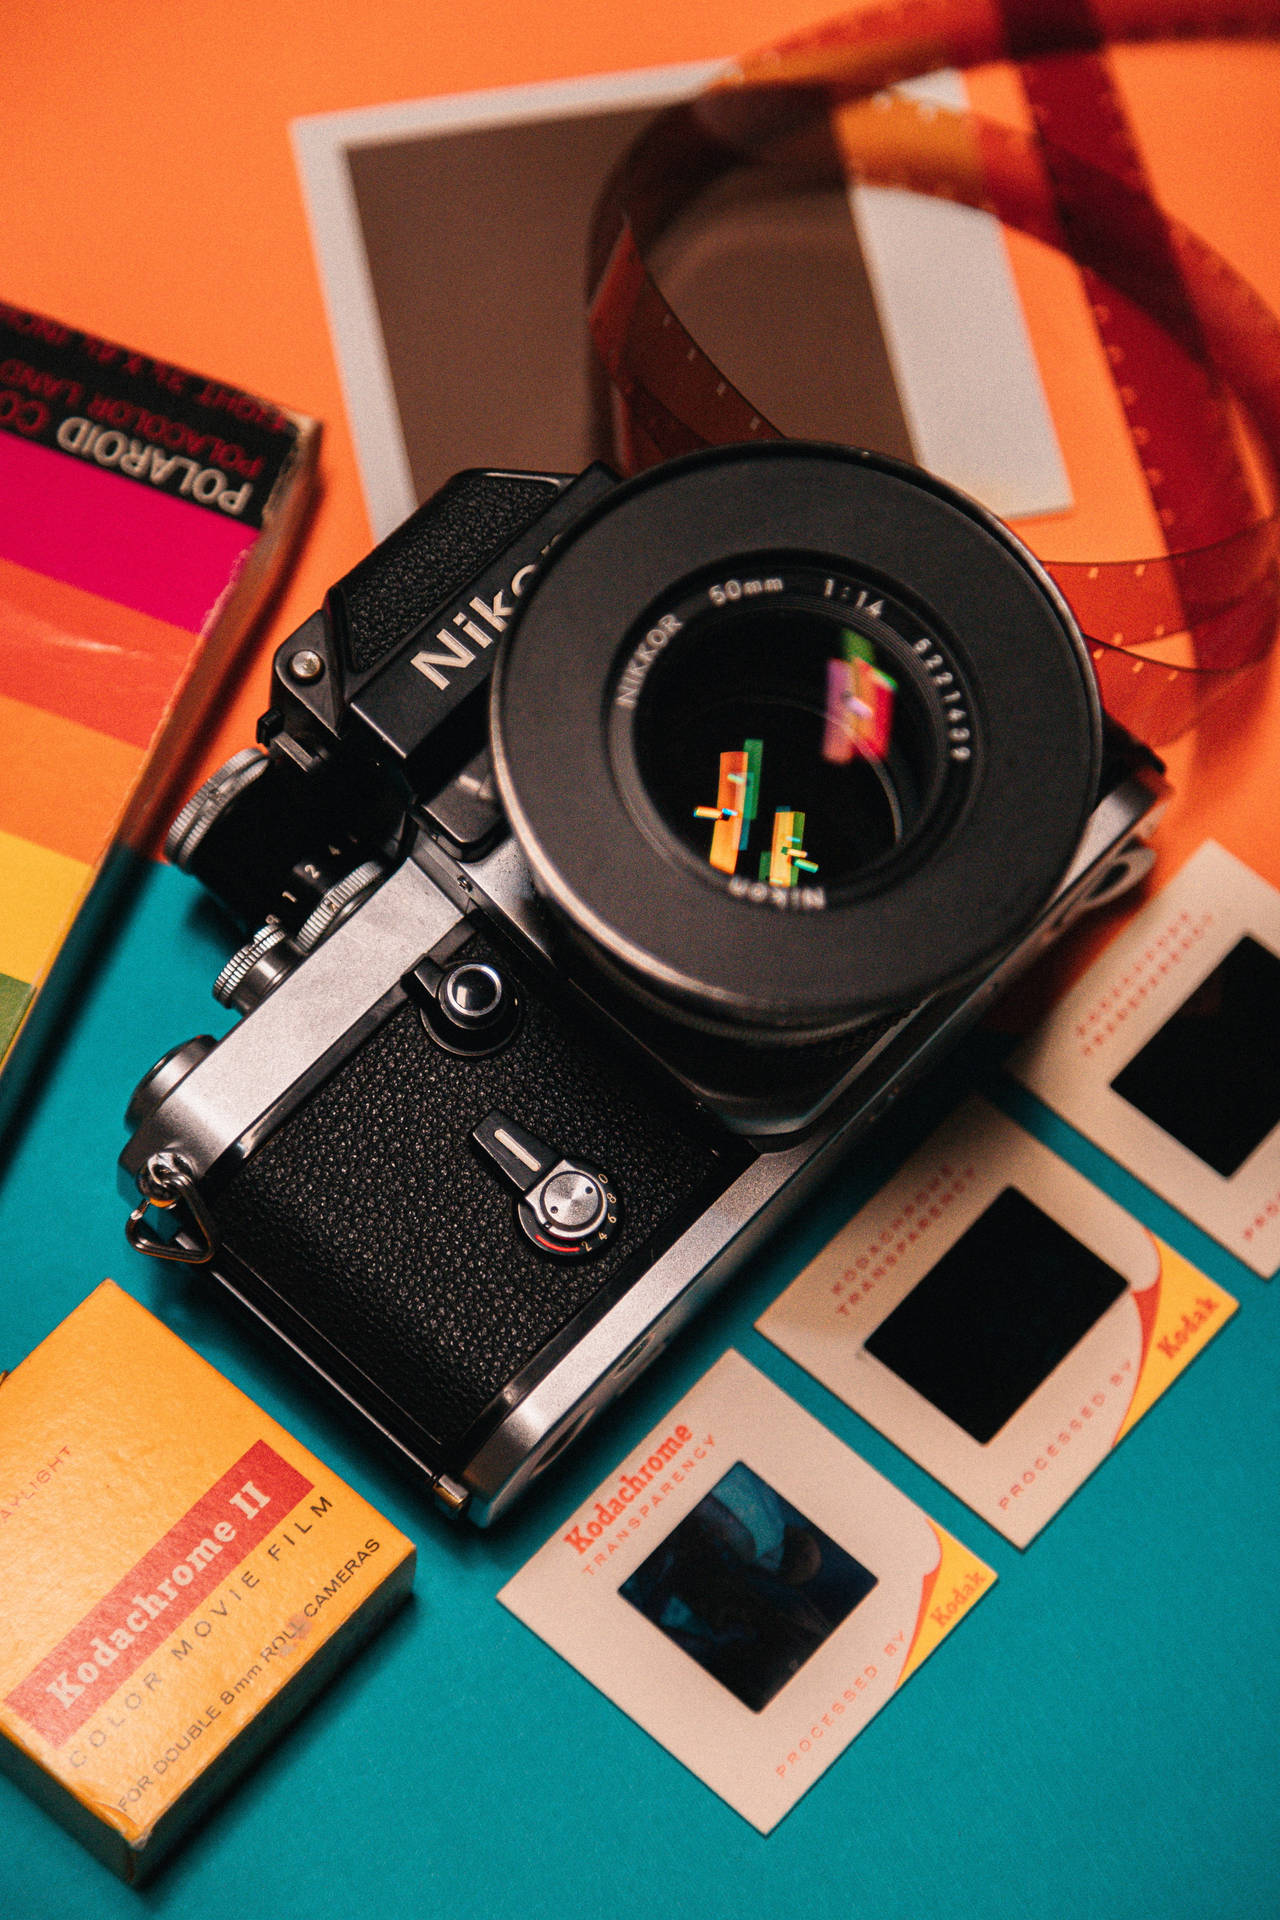 Nikon Dslr Camera And Polaroids Wallpaper